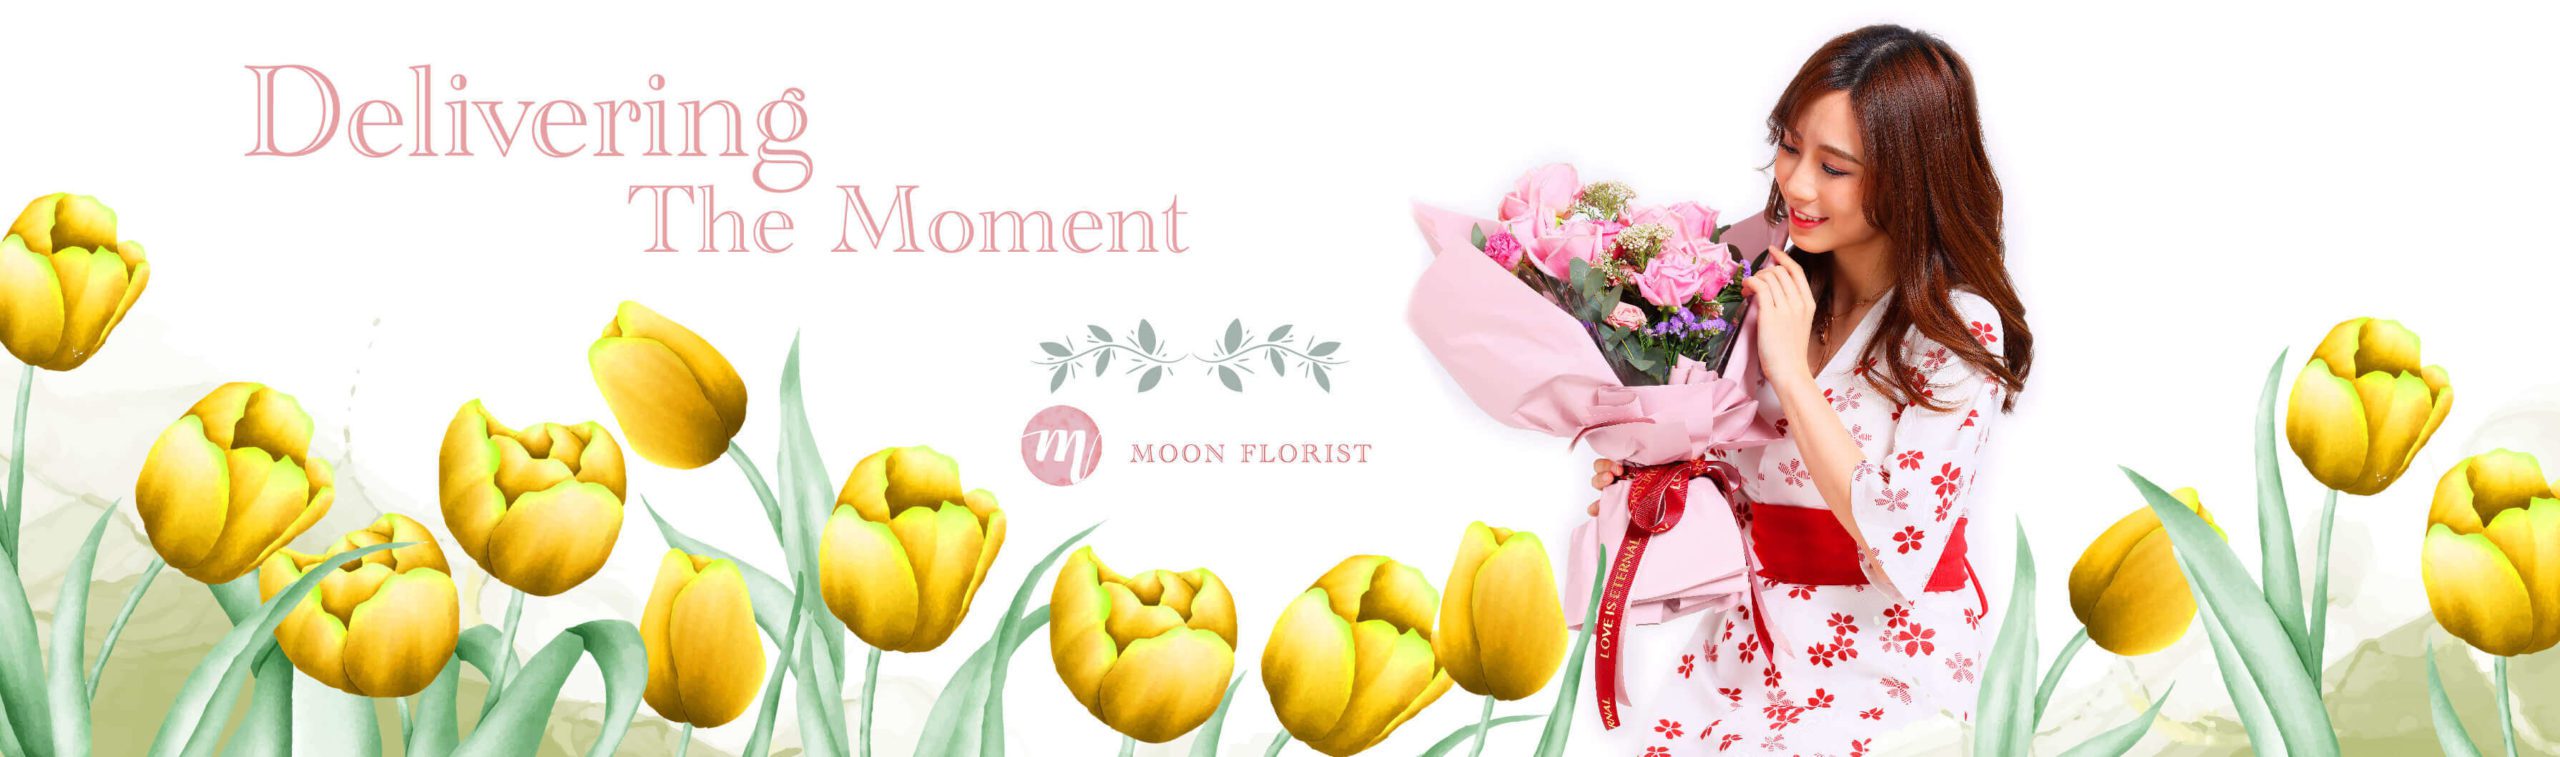 鬱金香花束, 紫色鬱金香花束, Moon Florist -model banner